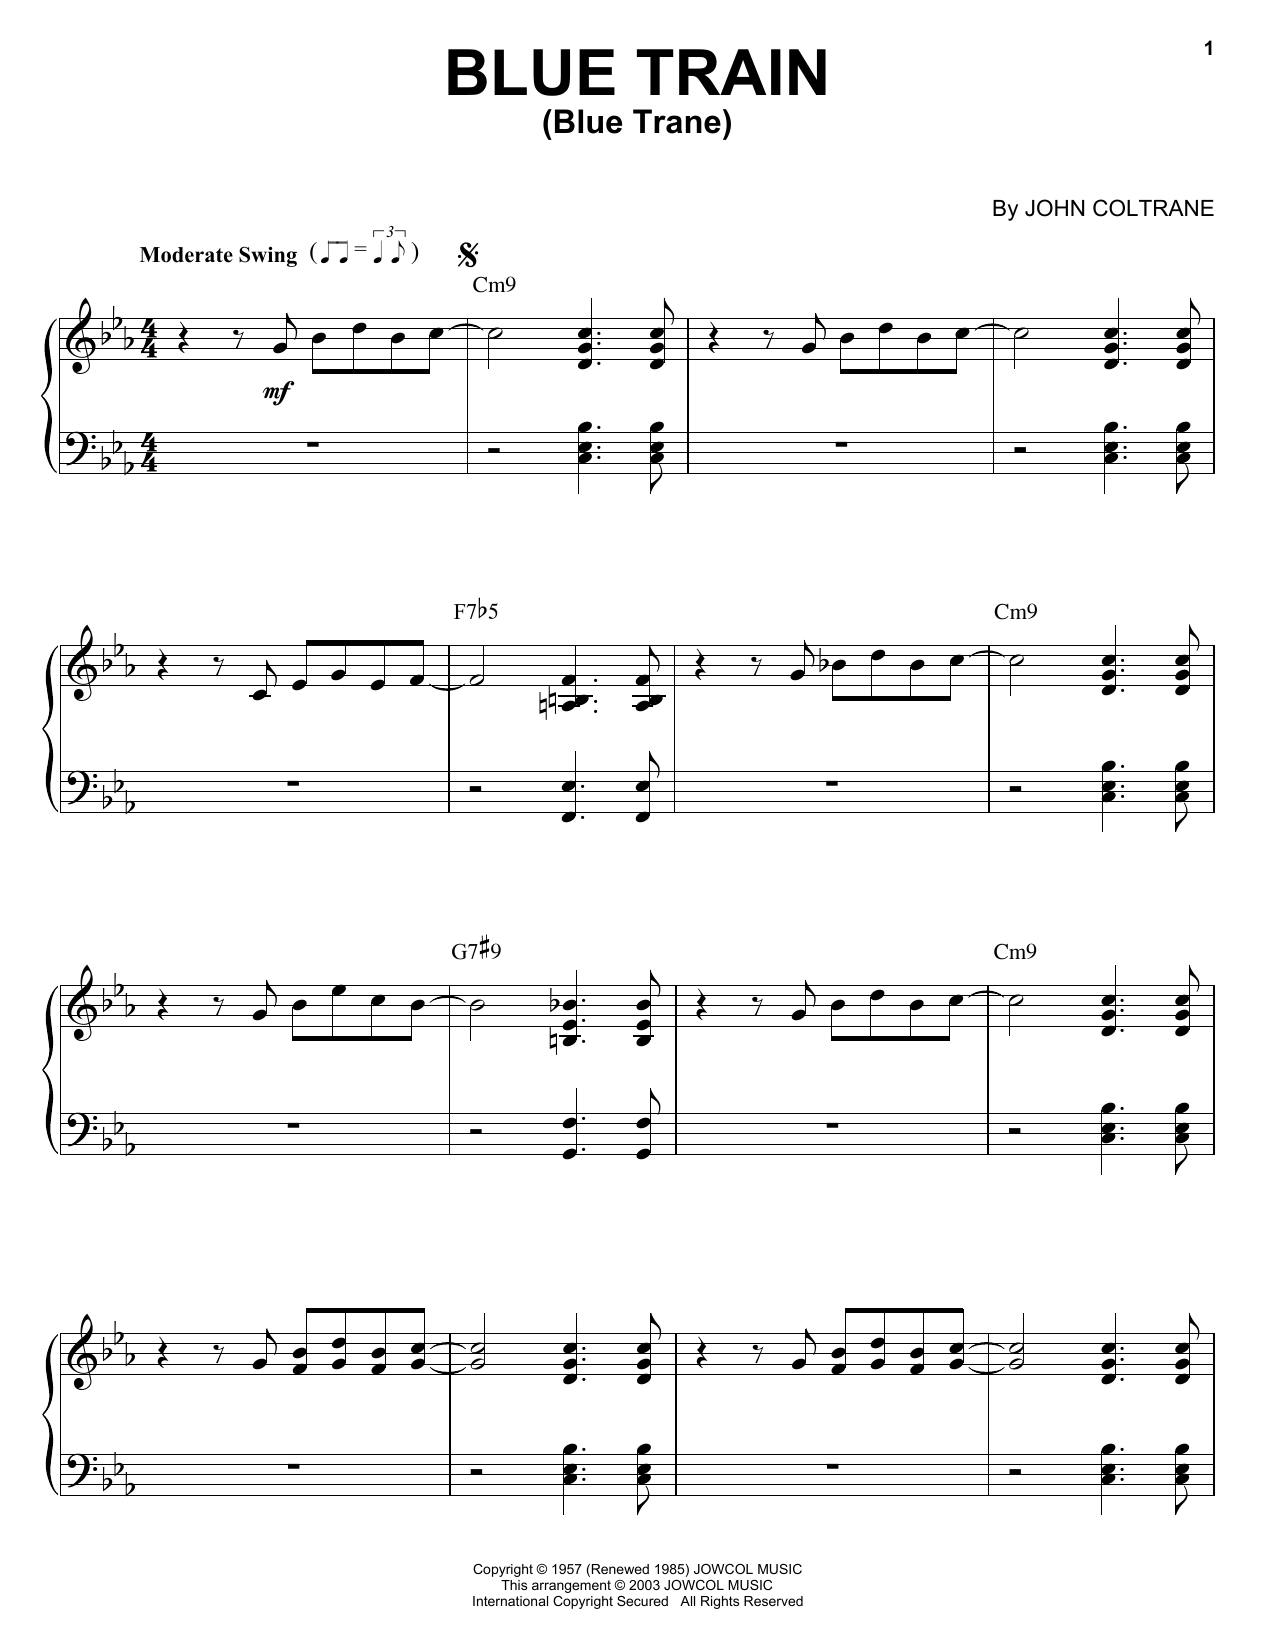 John Coltrane Blue Train (Blue Trane) Sheet Music Notes & Chords for Piano Solo - Download or Print PDF